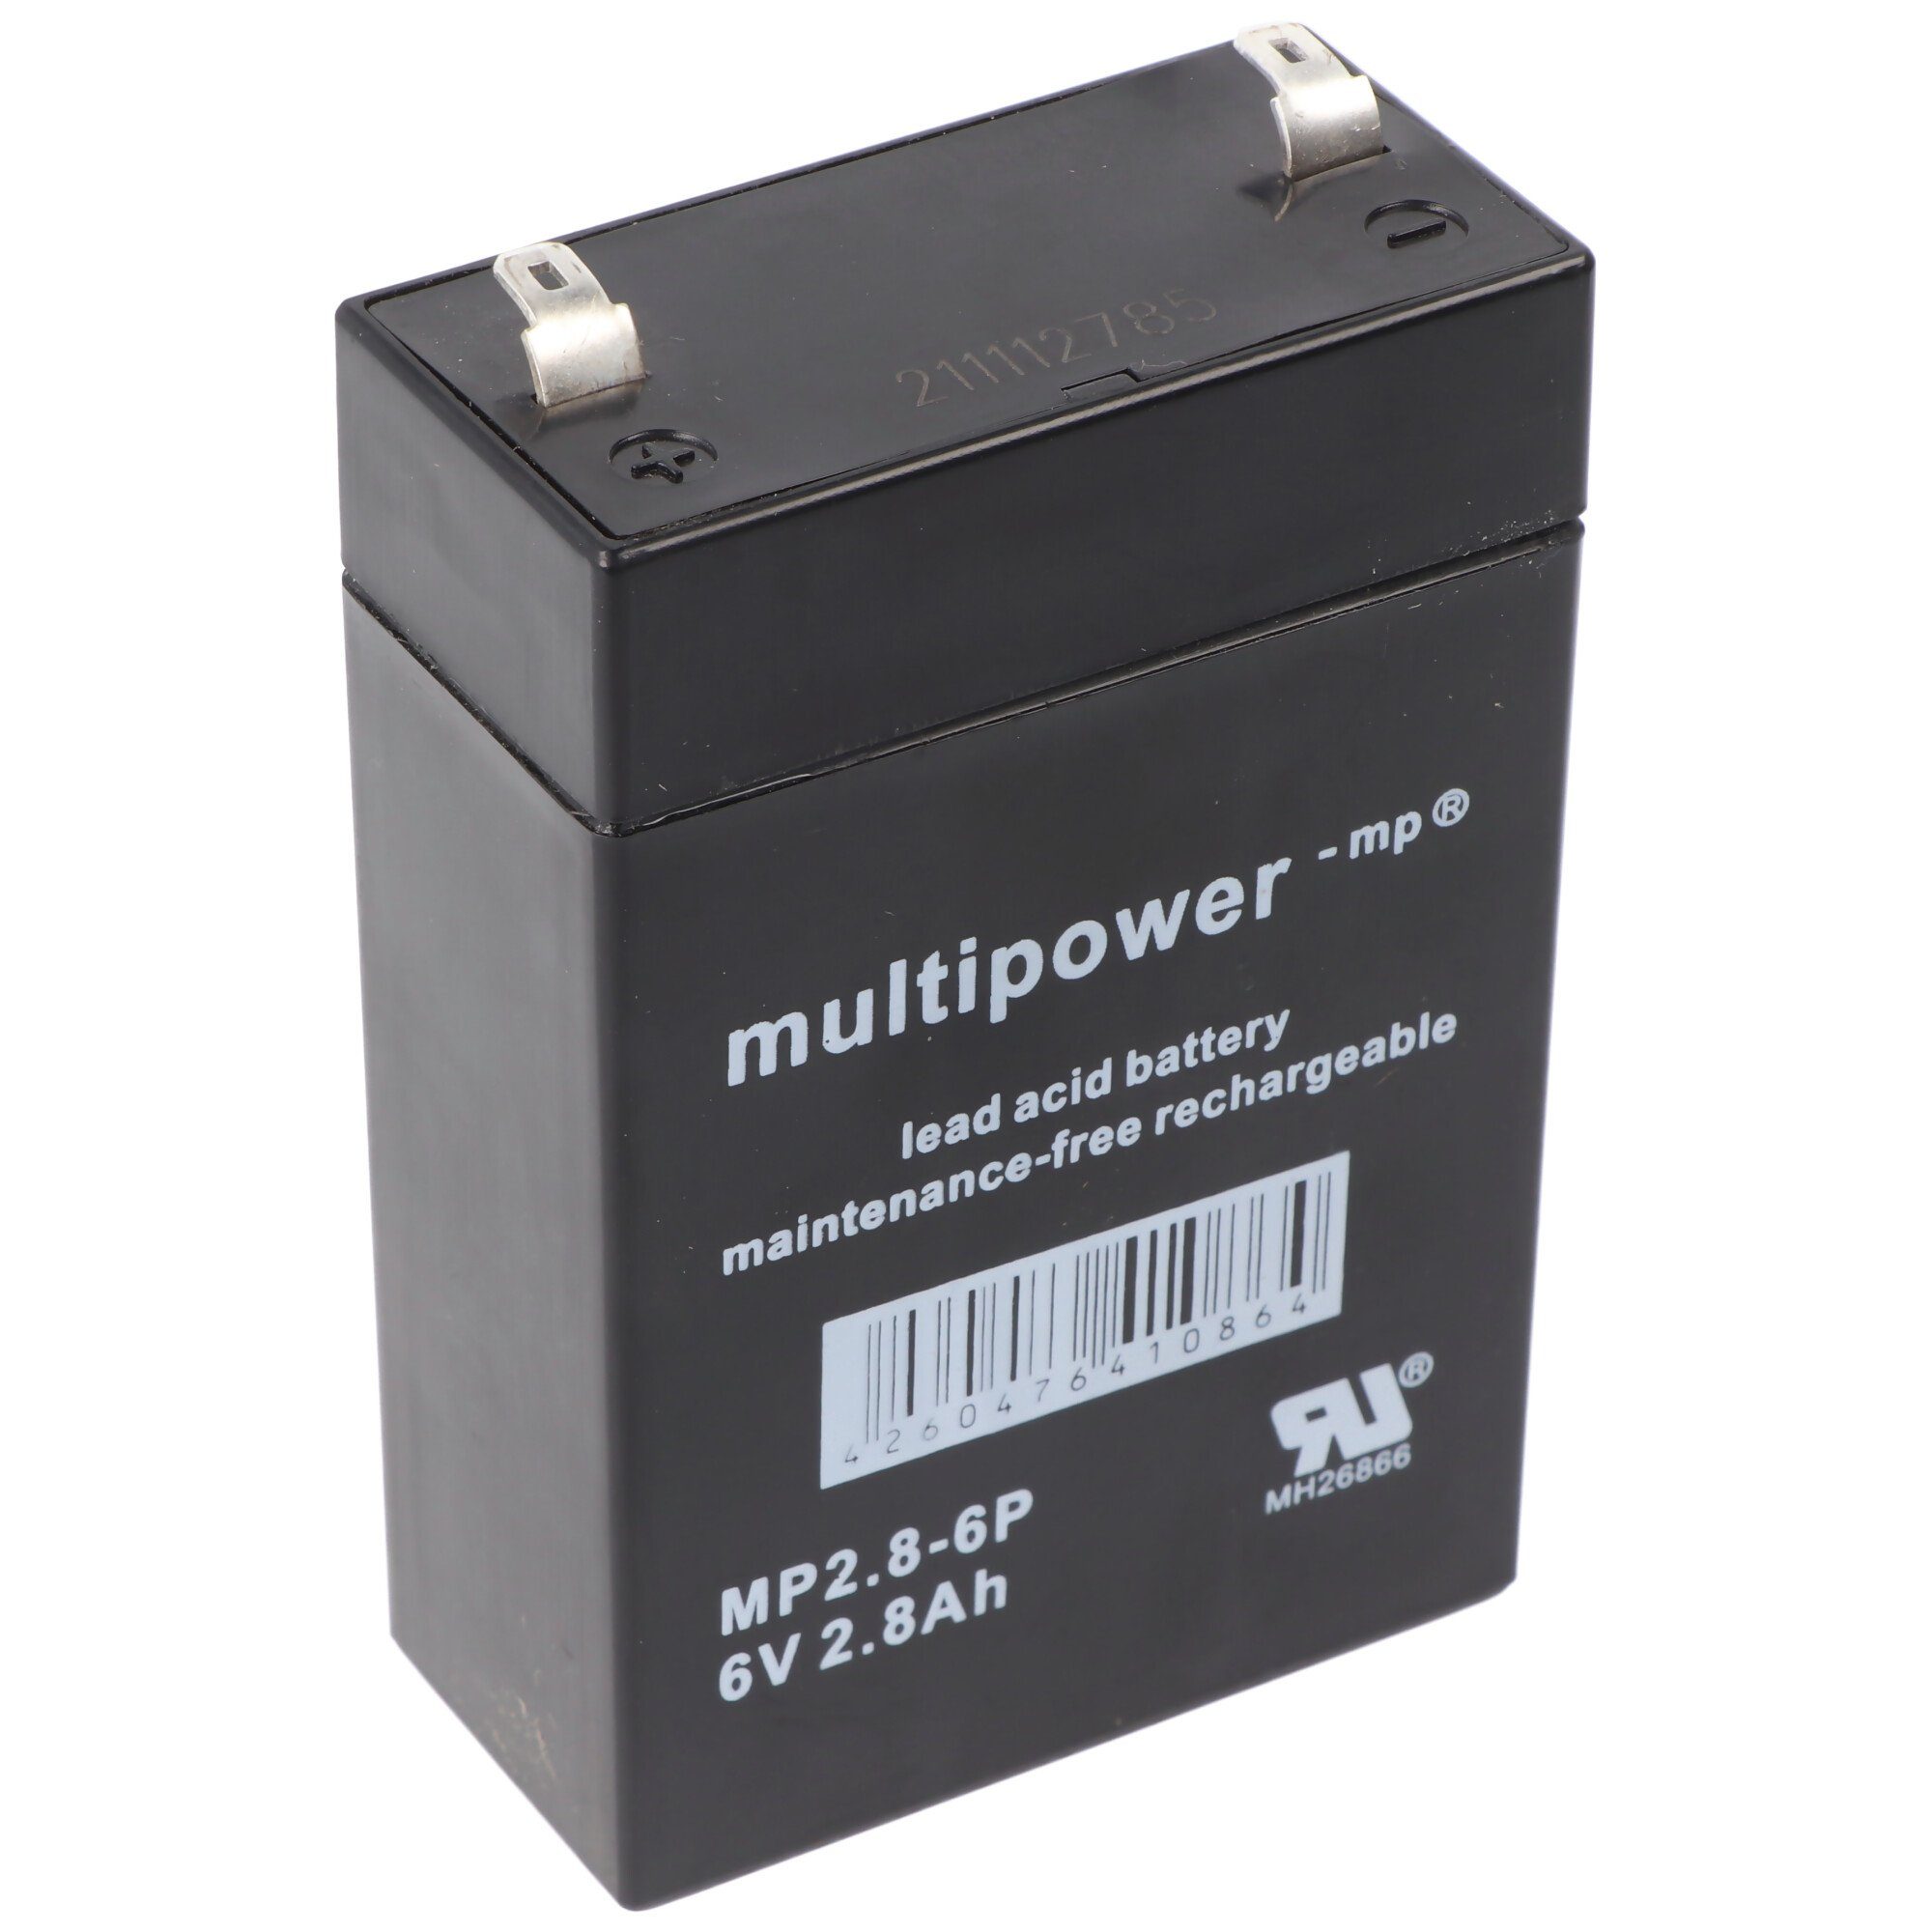 Multipower Multipower MP2.8-6 MP2.8-6 2800mAh, 4,8mm, mAh 6V Anschluss PB Akku 2800 V) (6,0 Blei, Akku